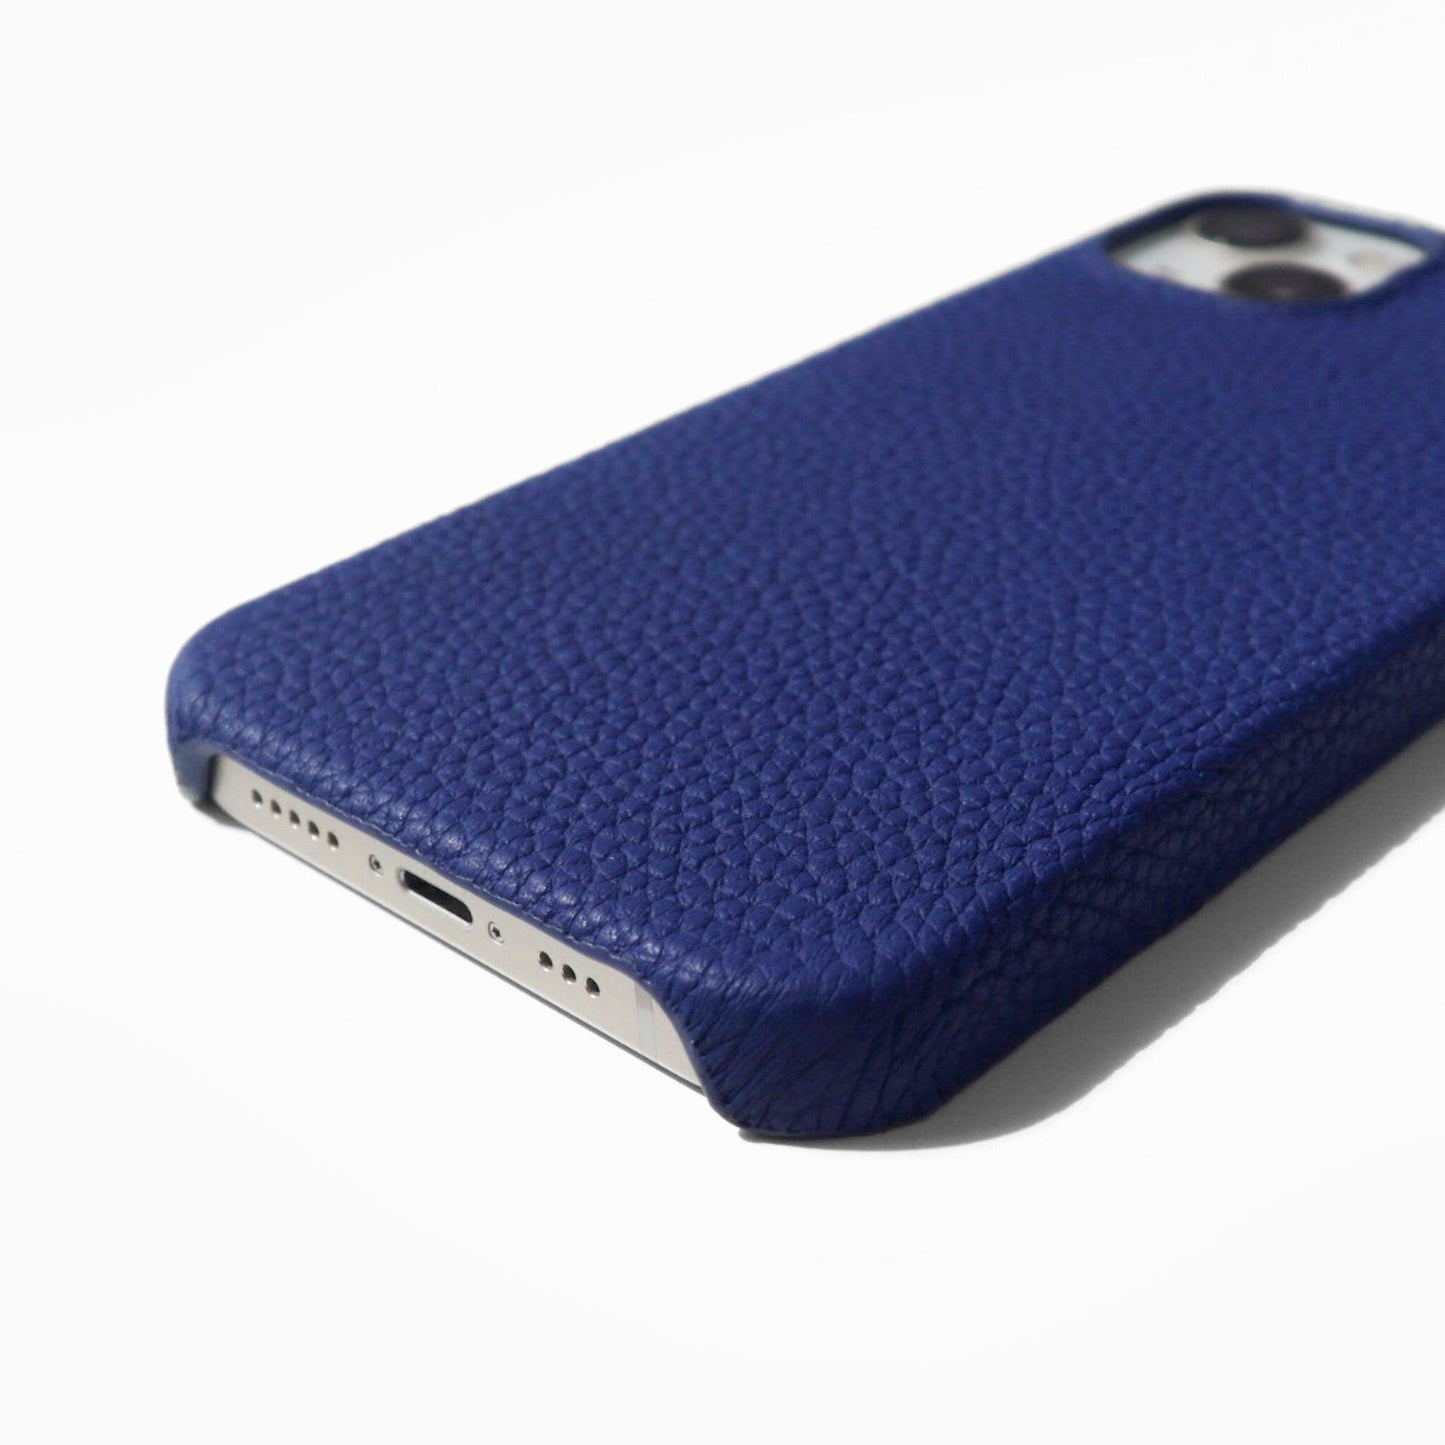 iPhone Thin Case - Navy Blue